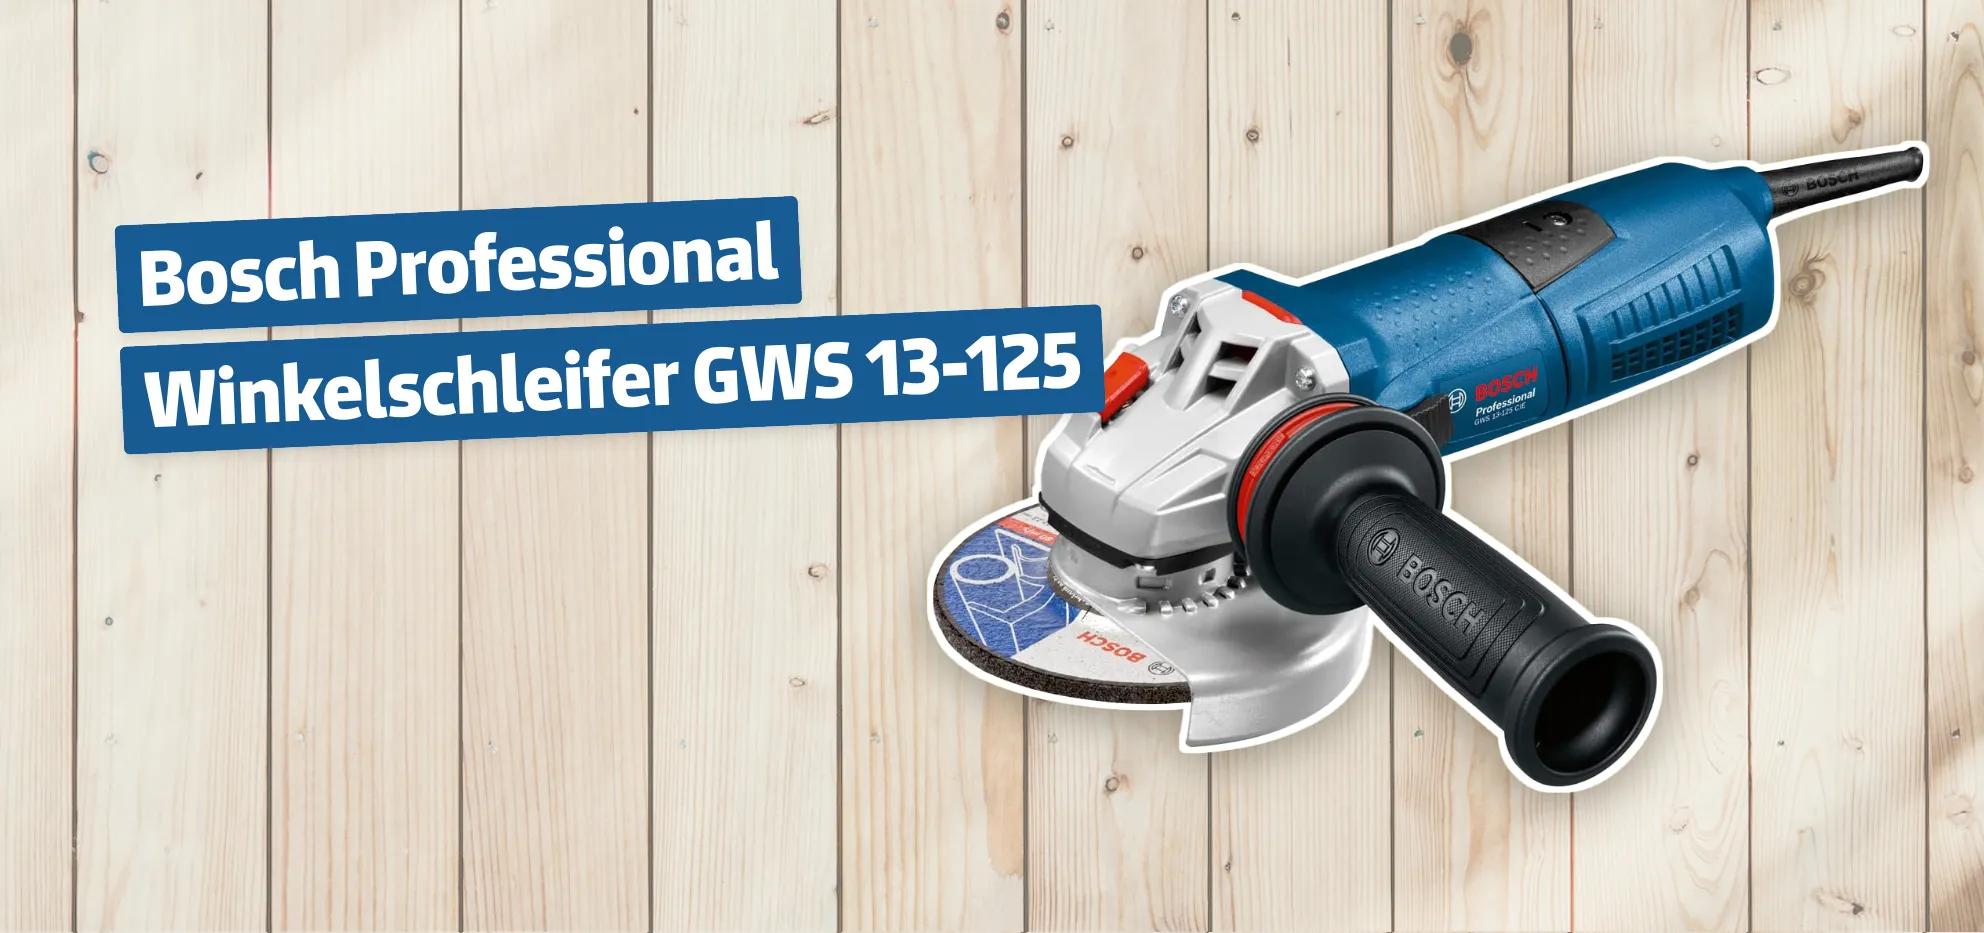 Bosch Professional Winkelschleifer GWS 13-125